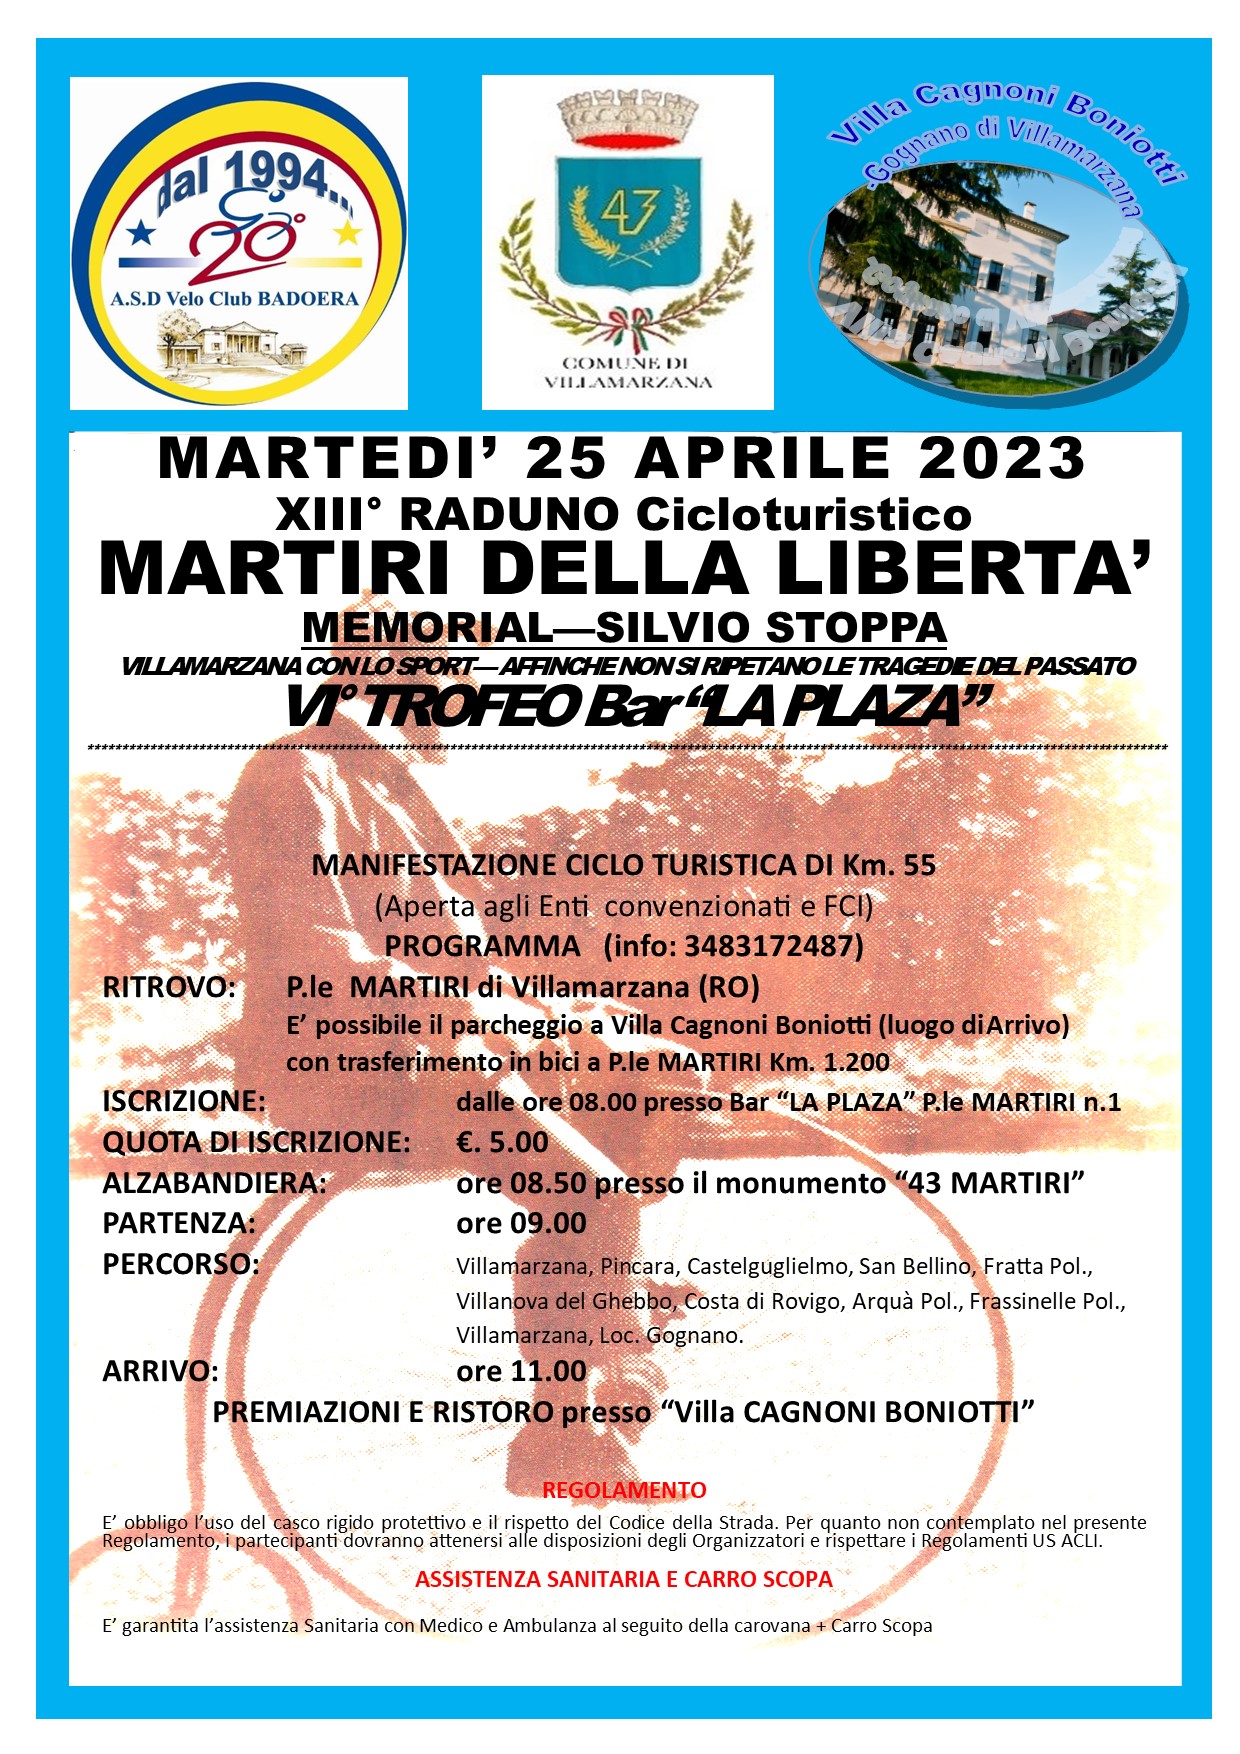 Villamarzana 13° cicloraduno Martiri della Libertà martedì 25 aprile 2023